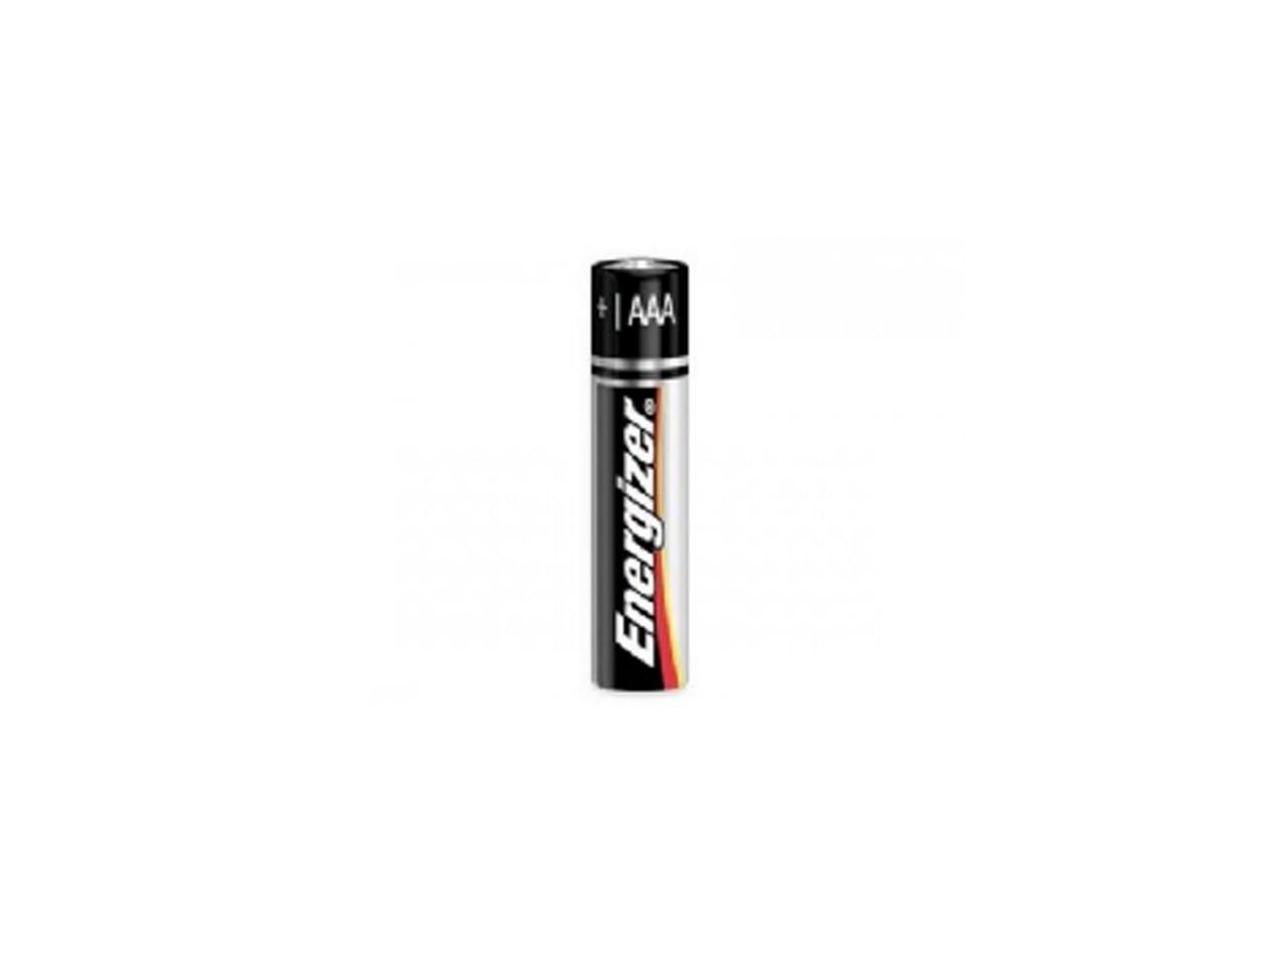 ENERGIZER Max 1.5V 1250mAh AAA Alkaline Battery, 144 Carton Counts